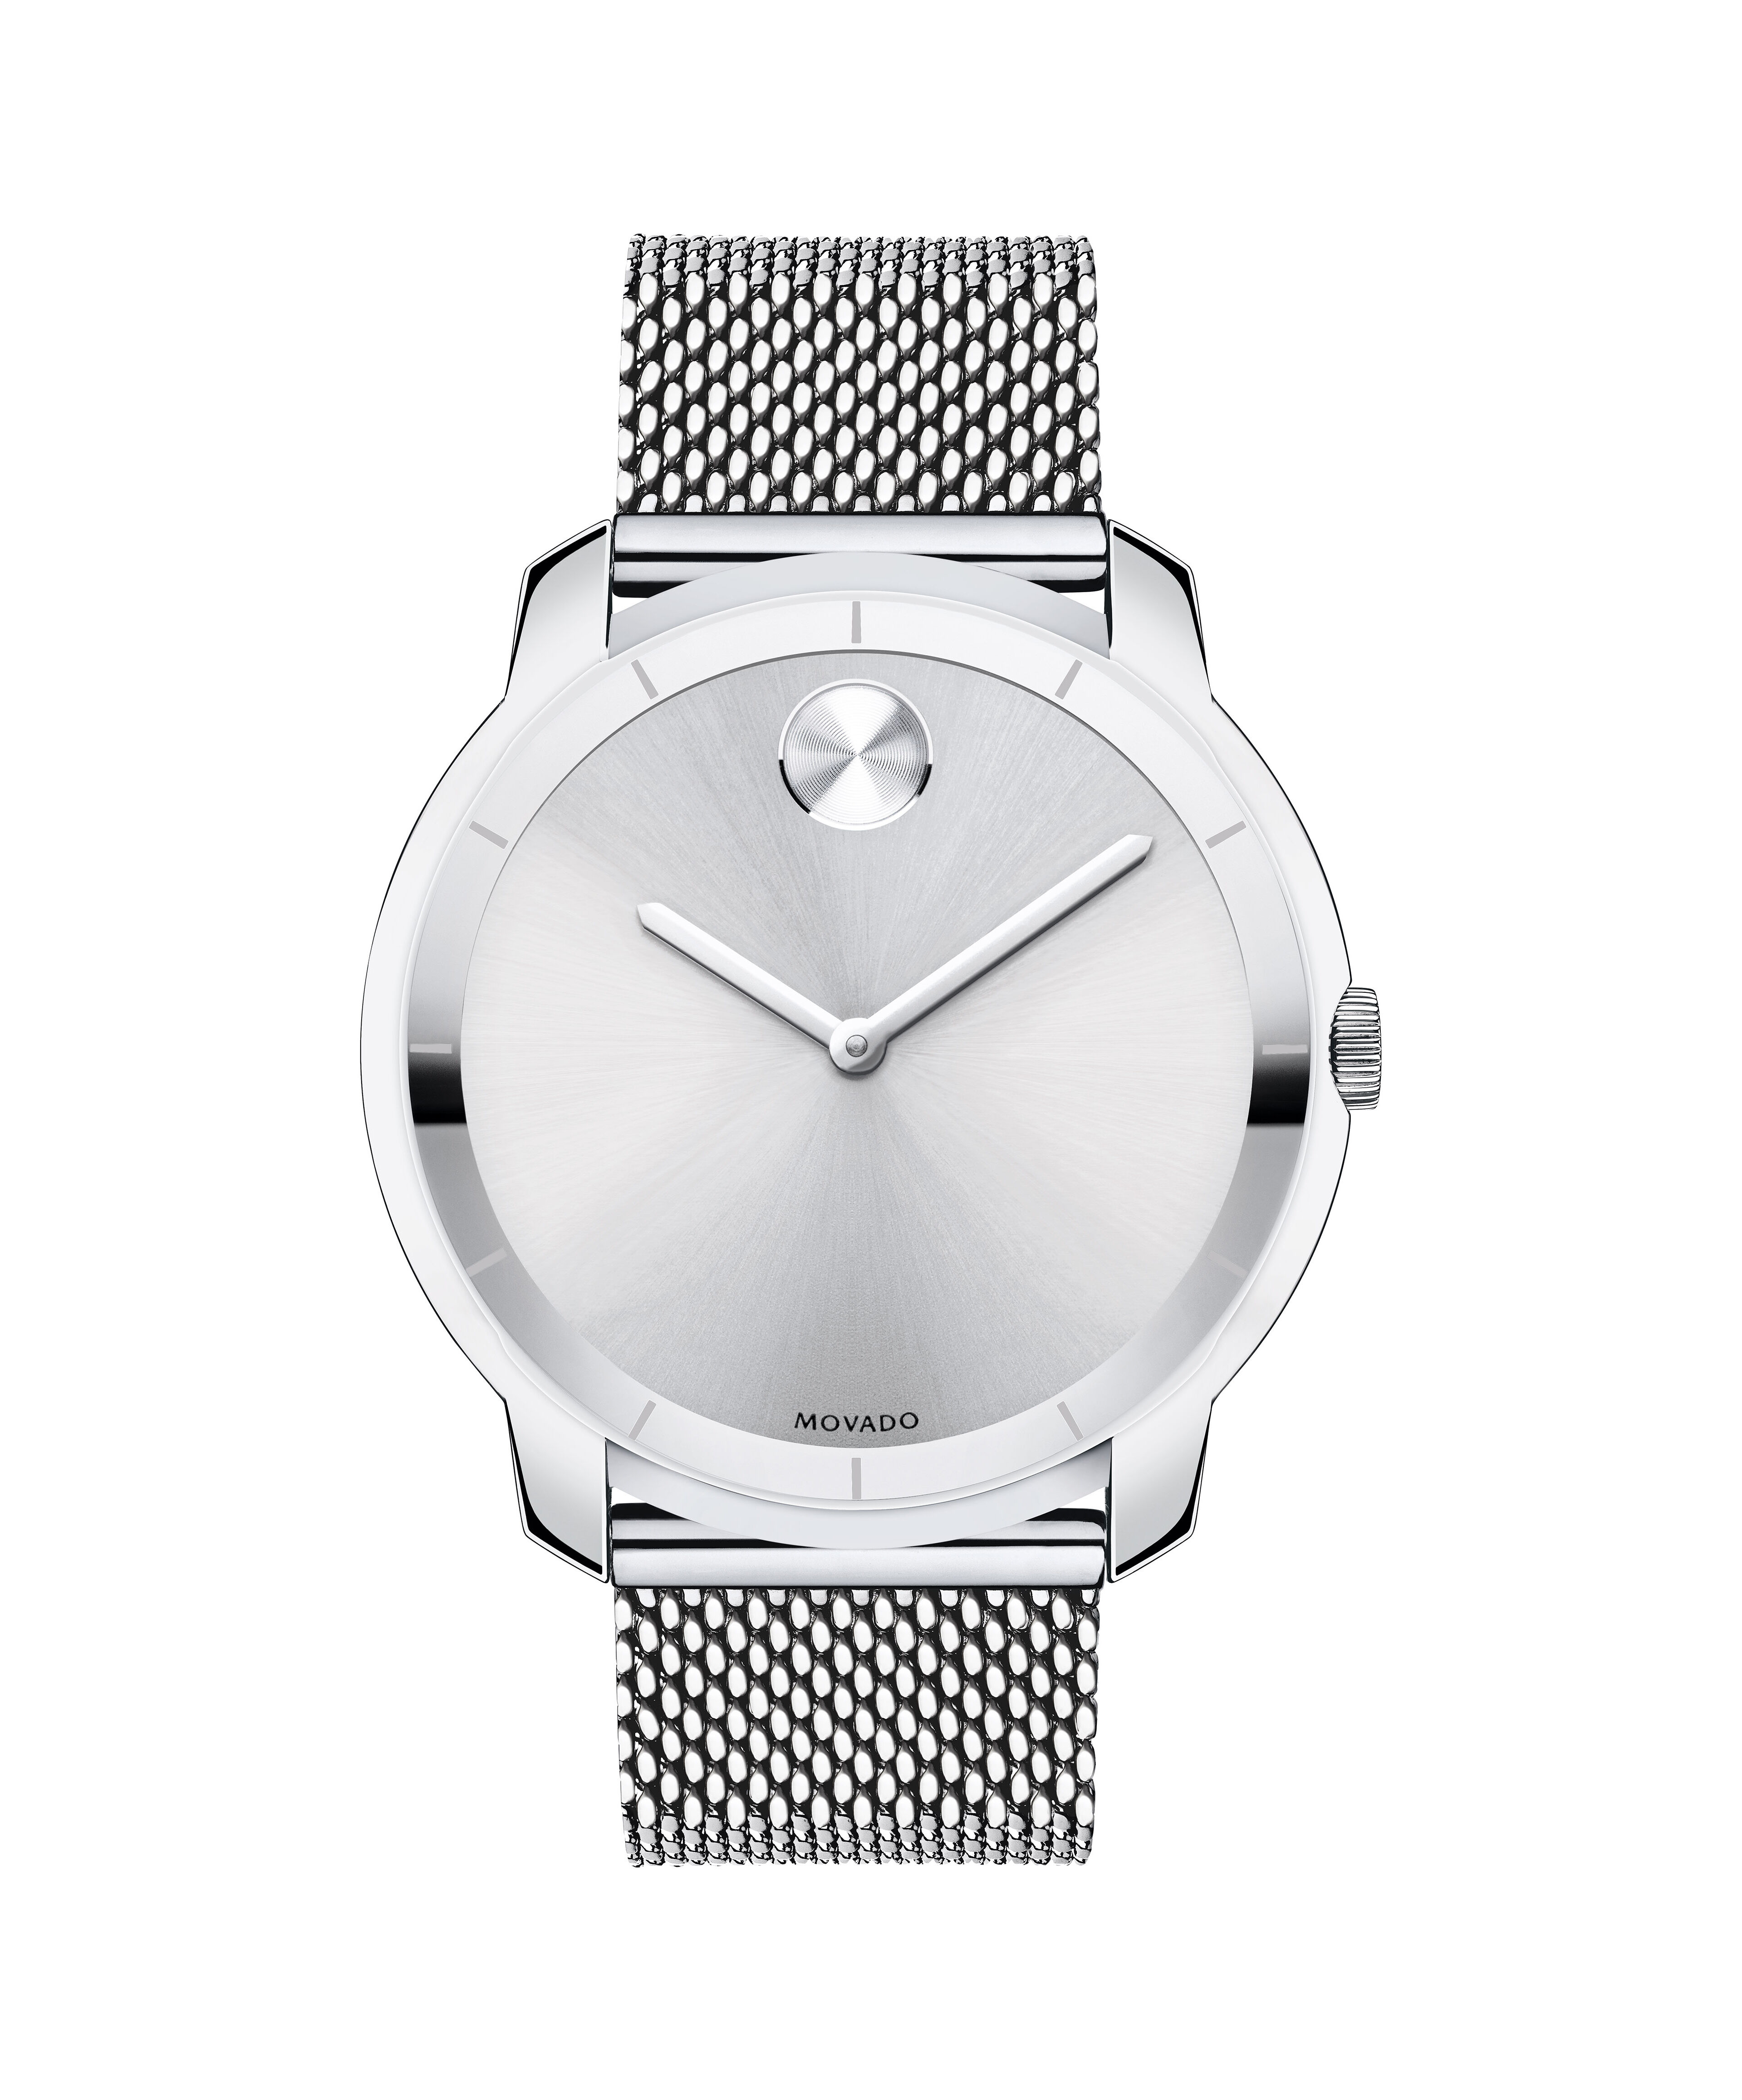 Replica Of Cartier Watches